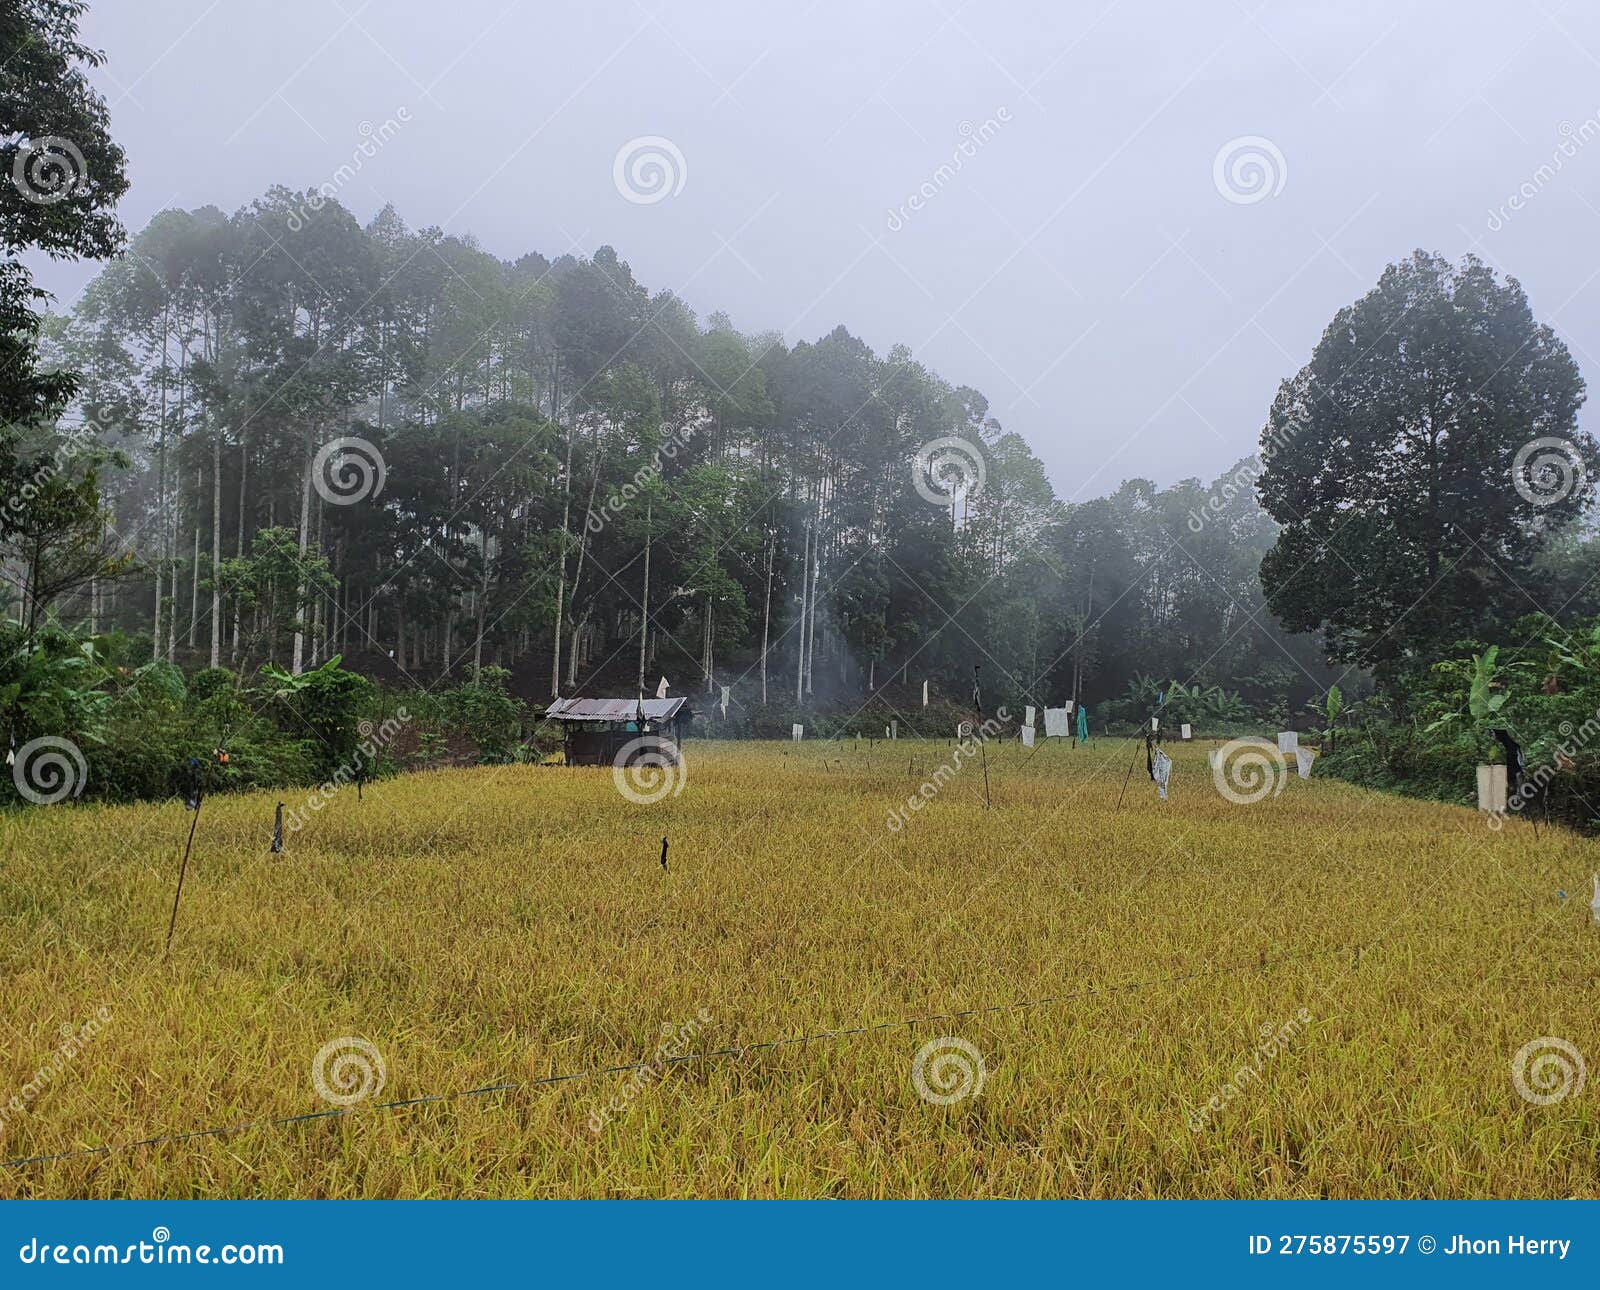 rice fields near the coffee plantation in sukamaju village, pagar alam